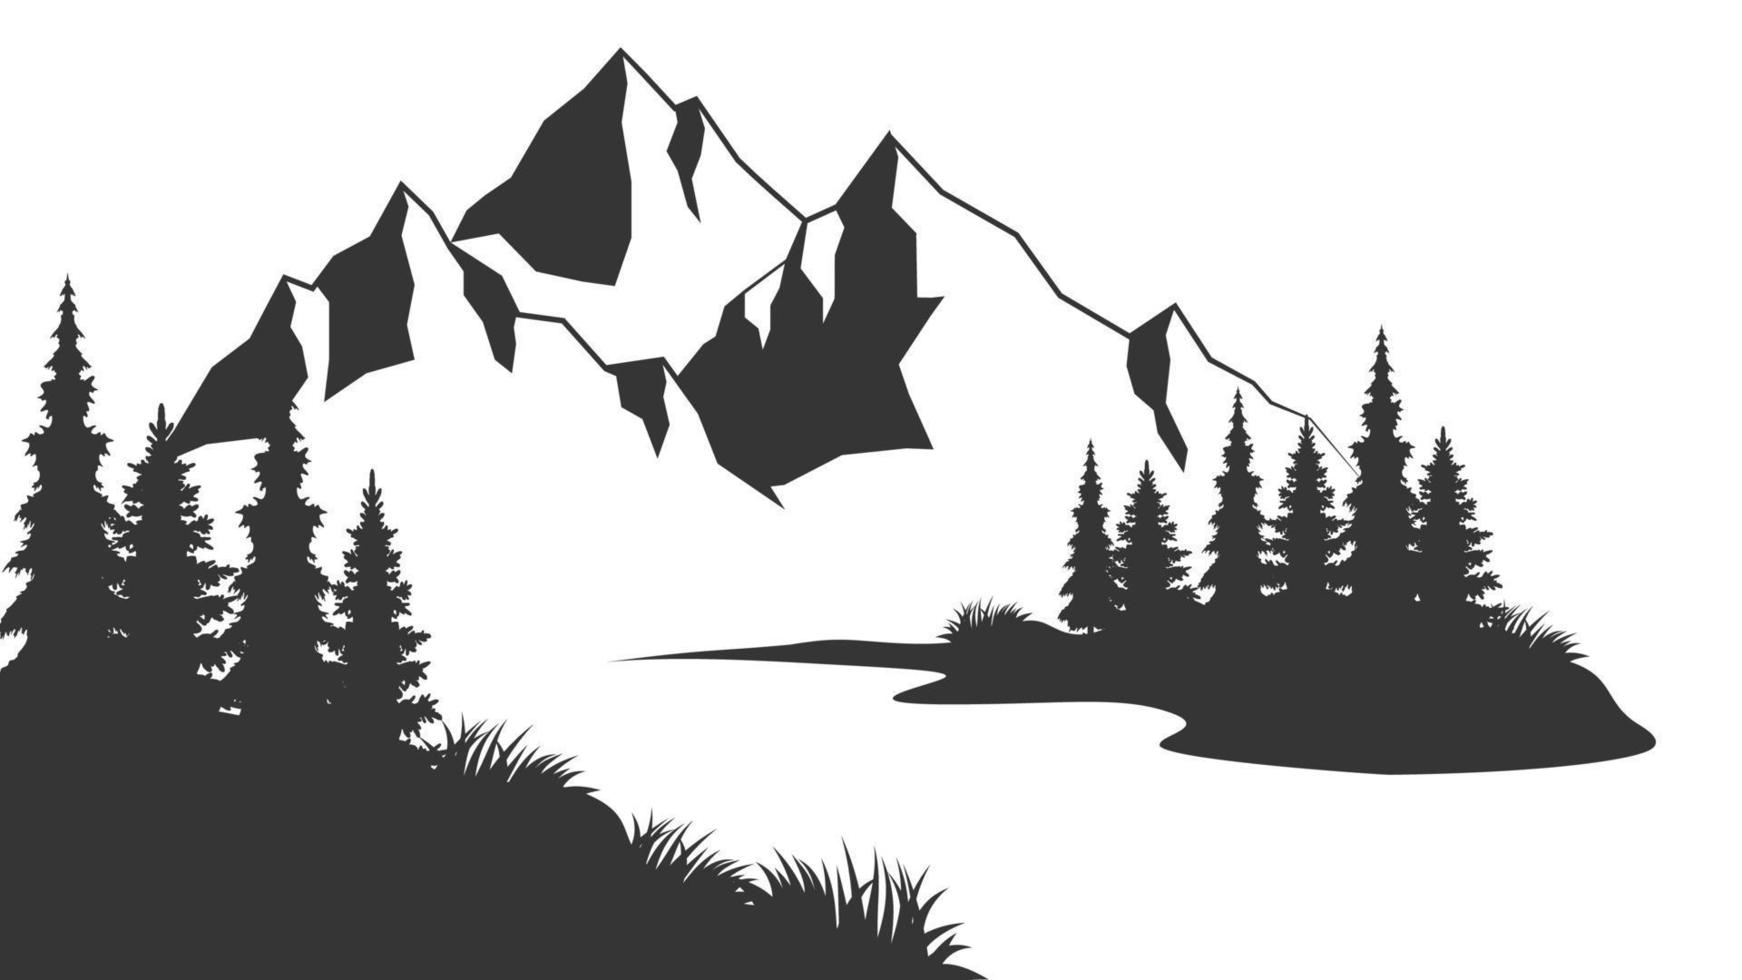 Muntain silhouette vector illustration. Mountain range silhouette isolated vector illustration. Old style black and white mountain vector illustration.